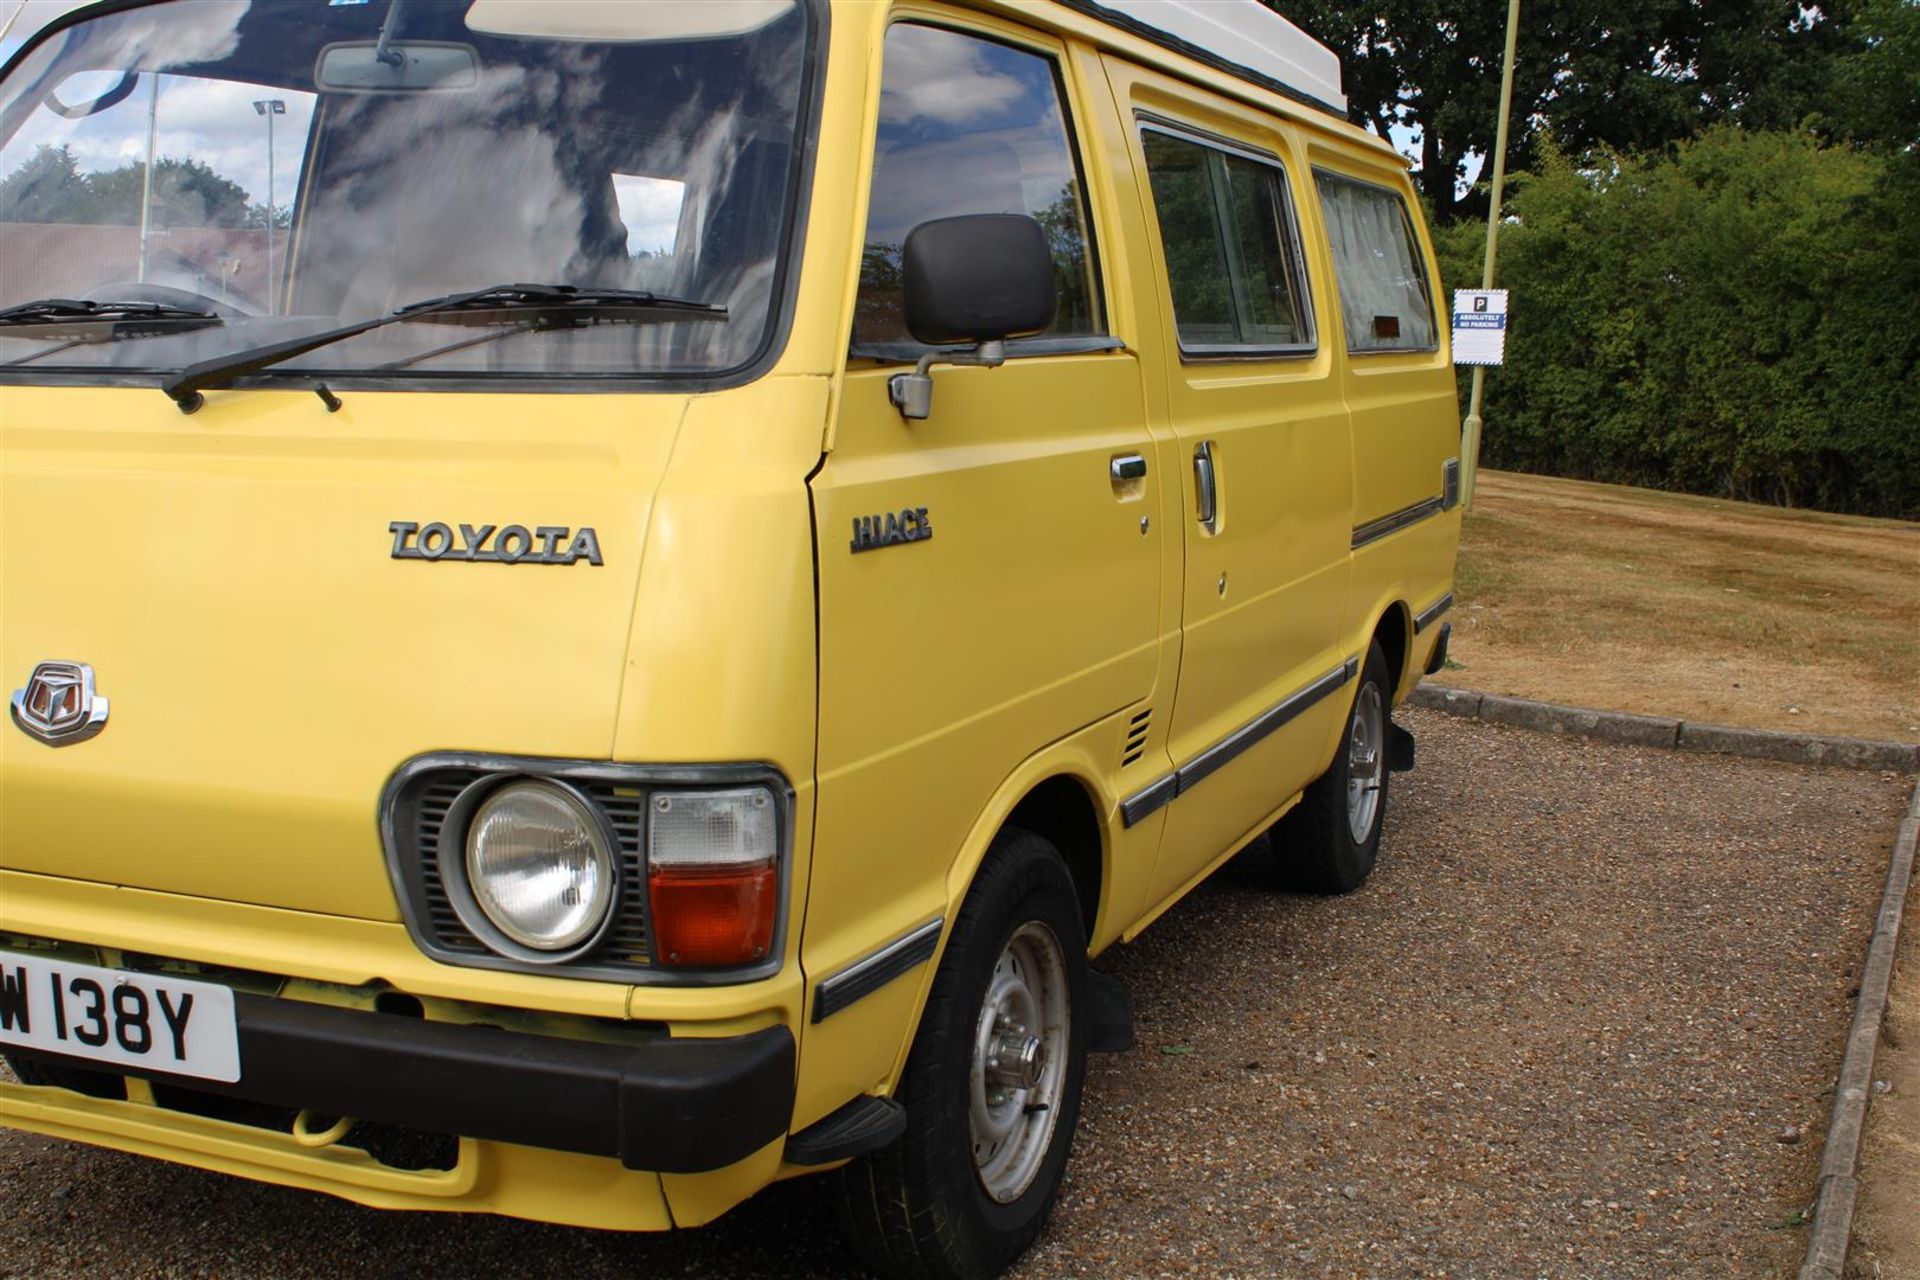 1983 Toyota Hi-Ace Camper Van - Image 12 of 37